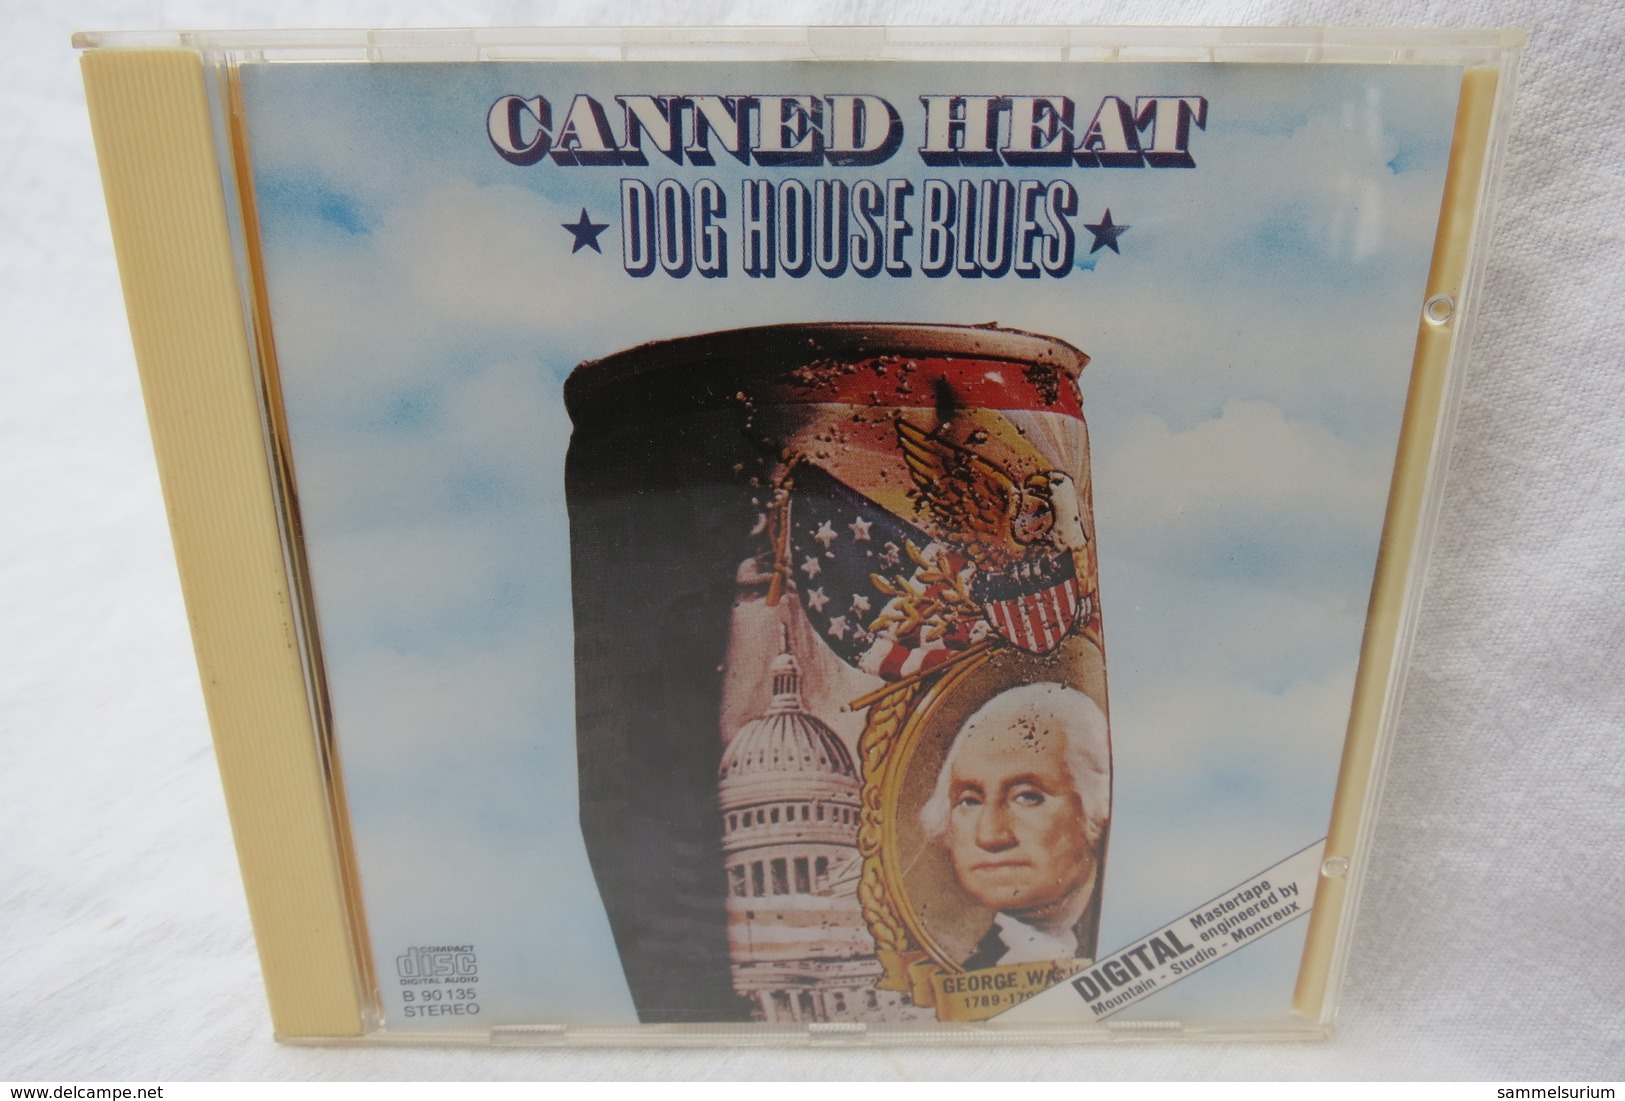 CD "Canned Heat" Dog House Blues - Blues